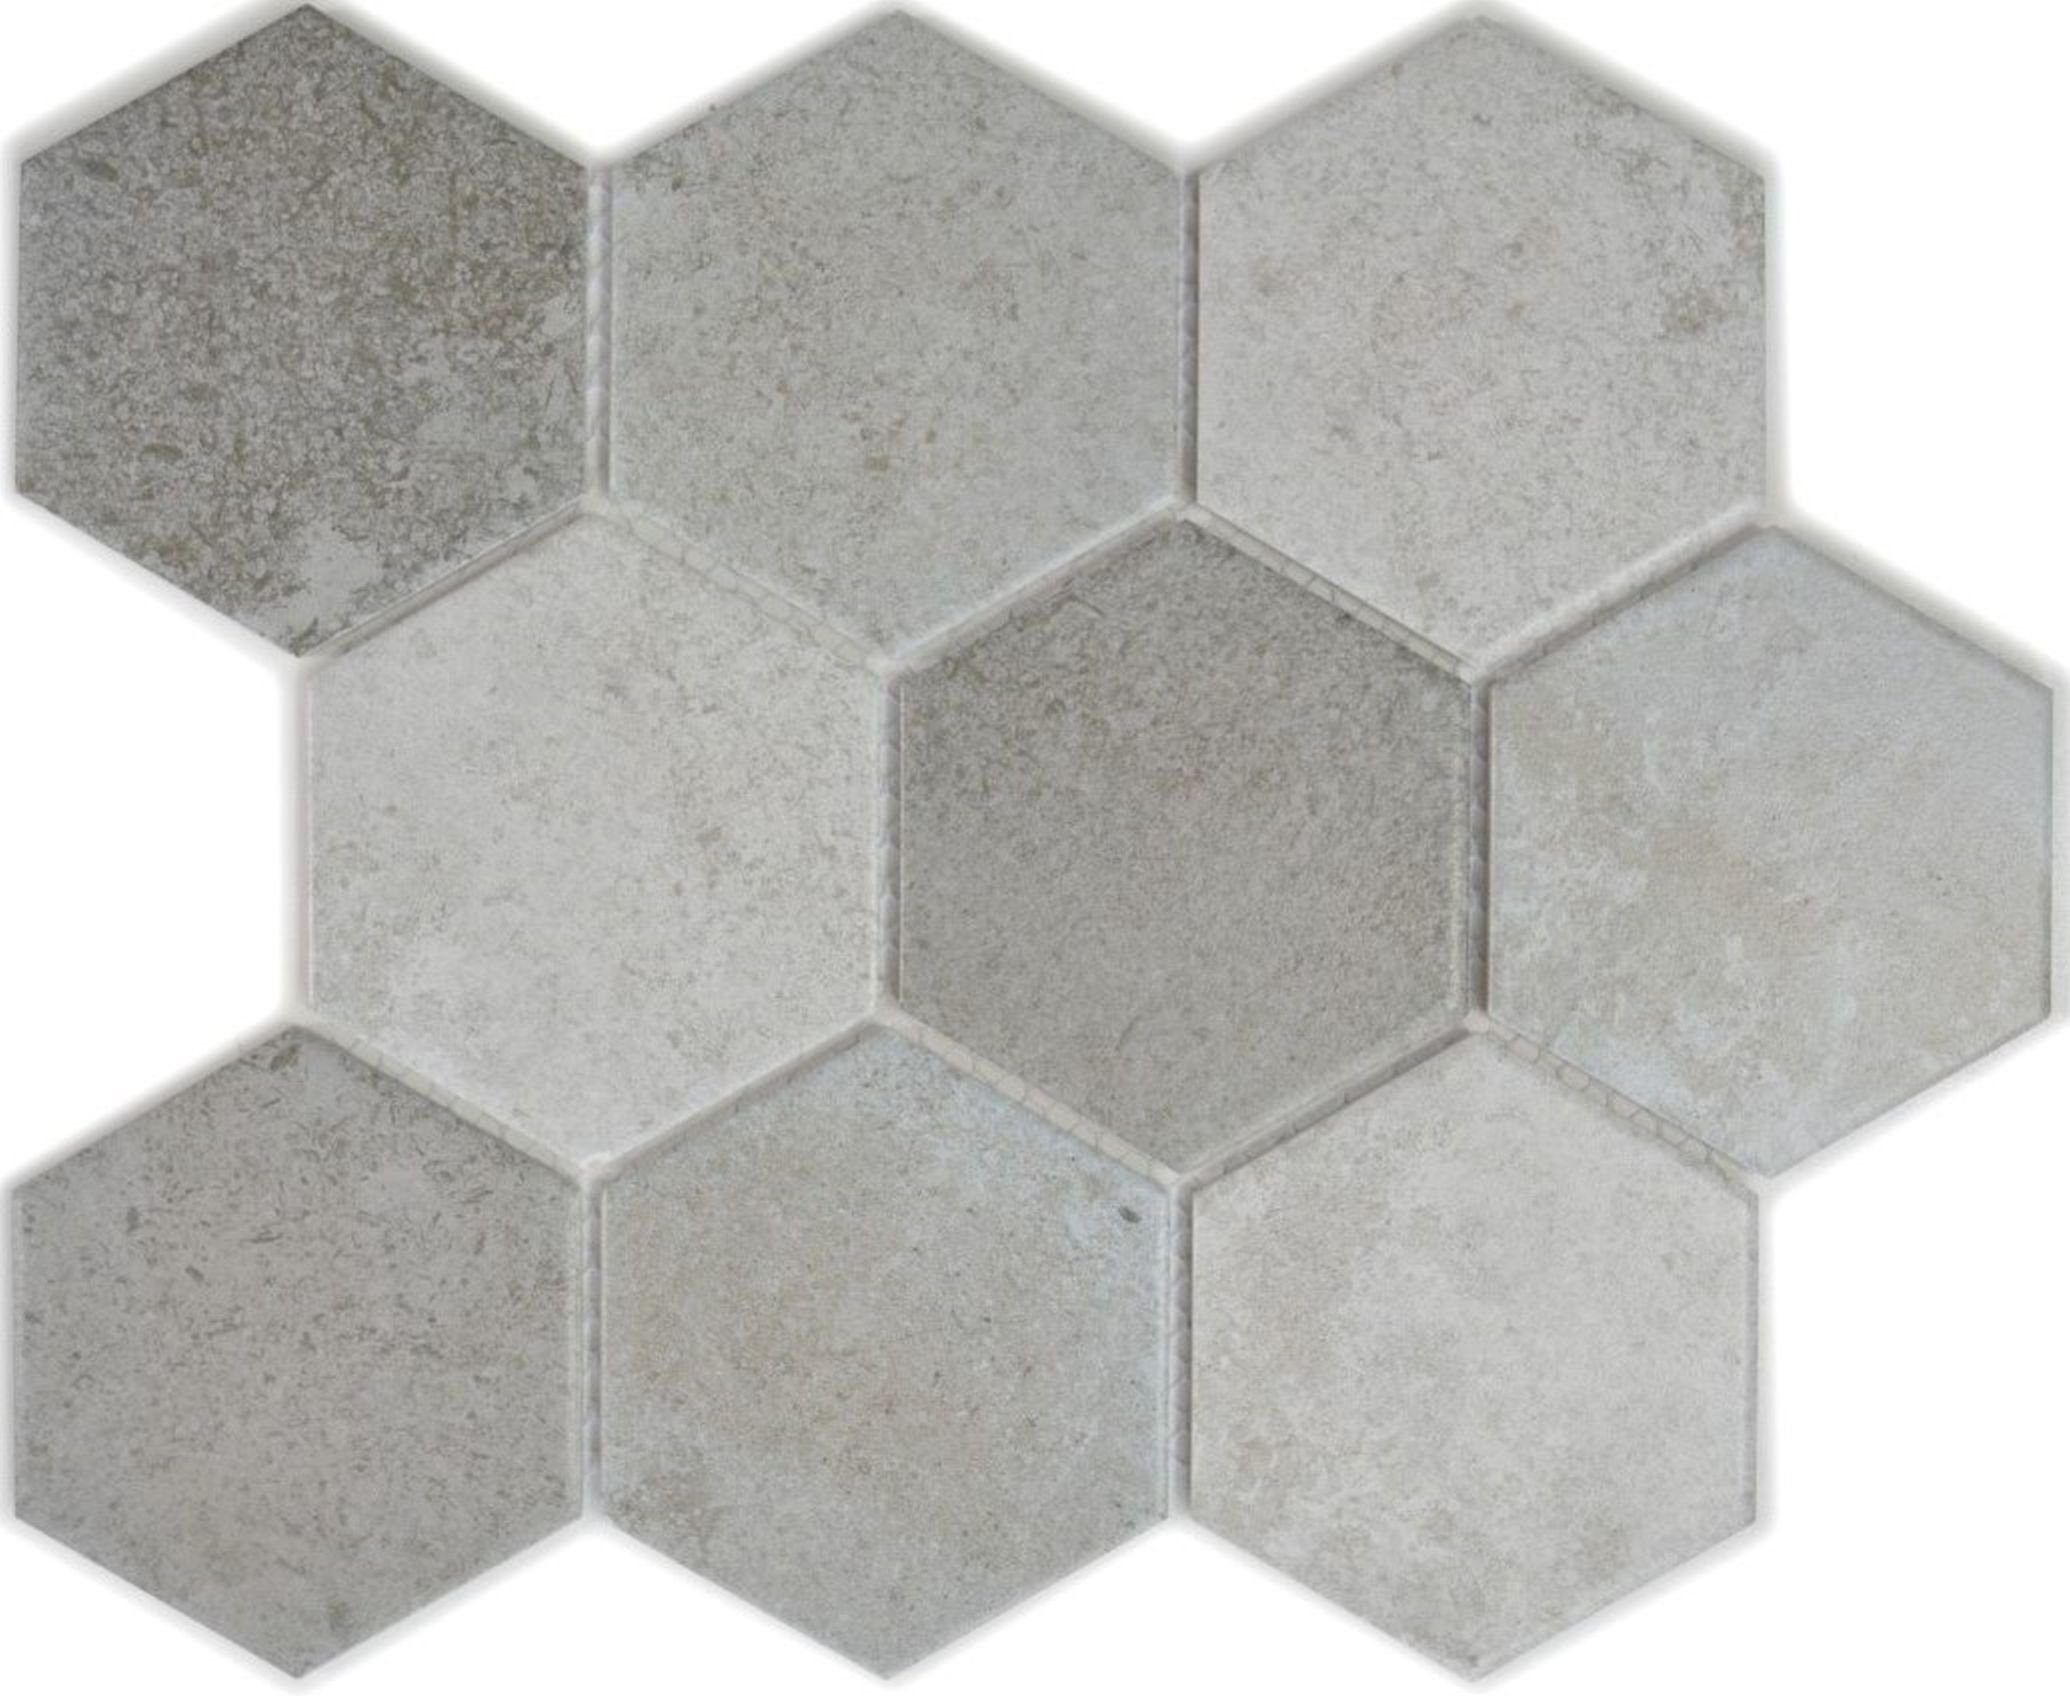 Mosani Mosaikfliesen Hexagonale Sechseck Mosaik WC Bad XL Küche Fliese Keramik grau